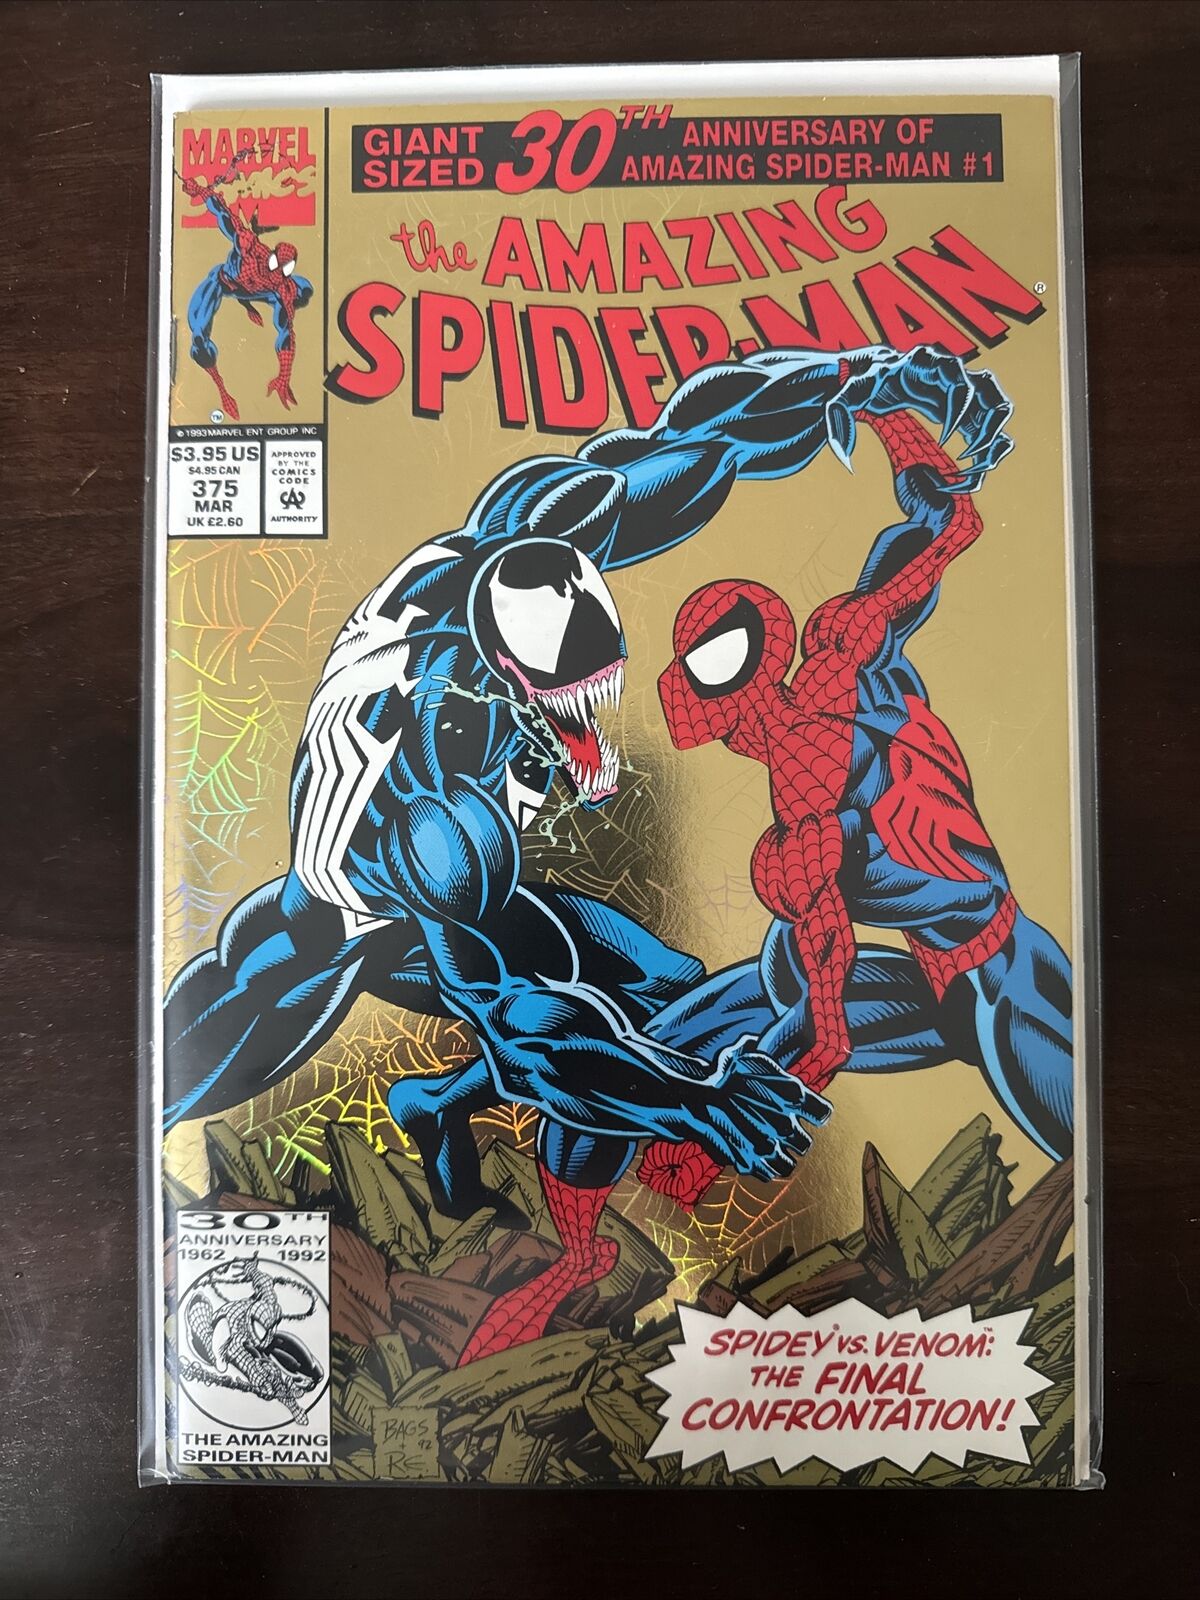 The Amazing Spider-Man 375